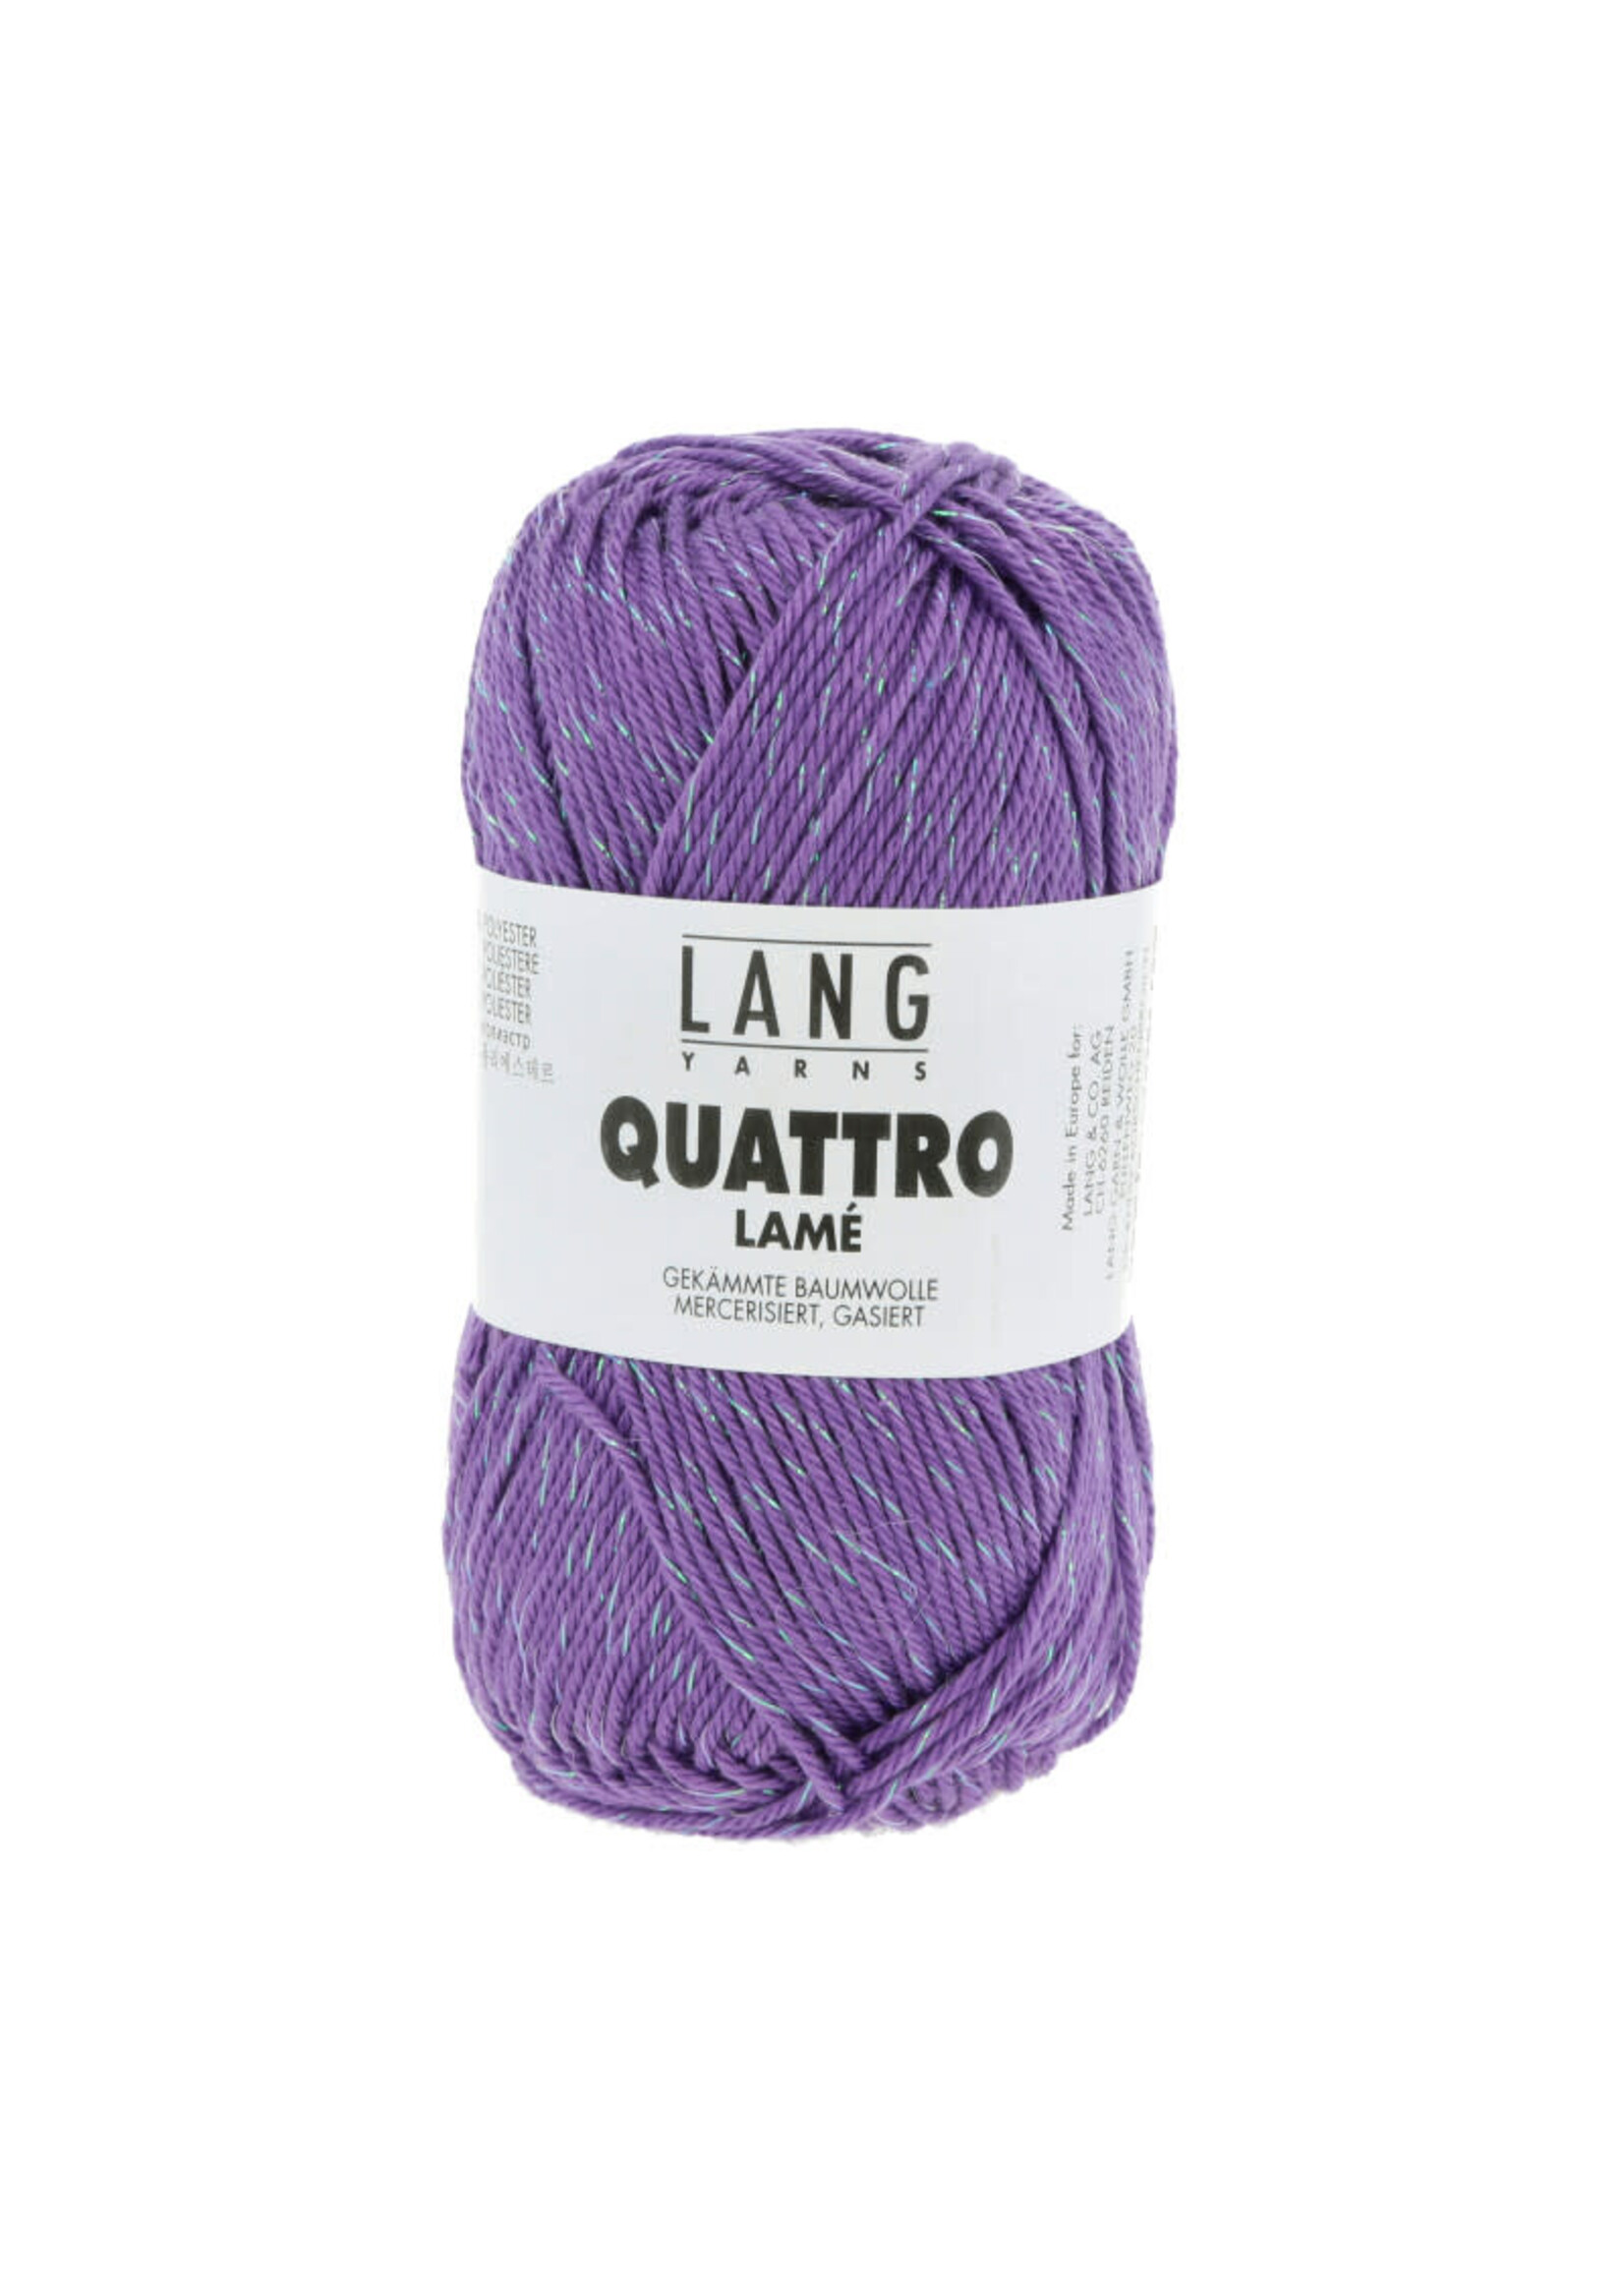 LangYarns Quattro Lamé - 0146 Middenviolet